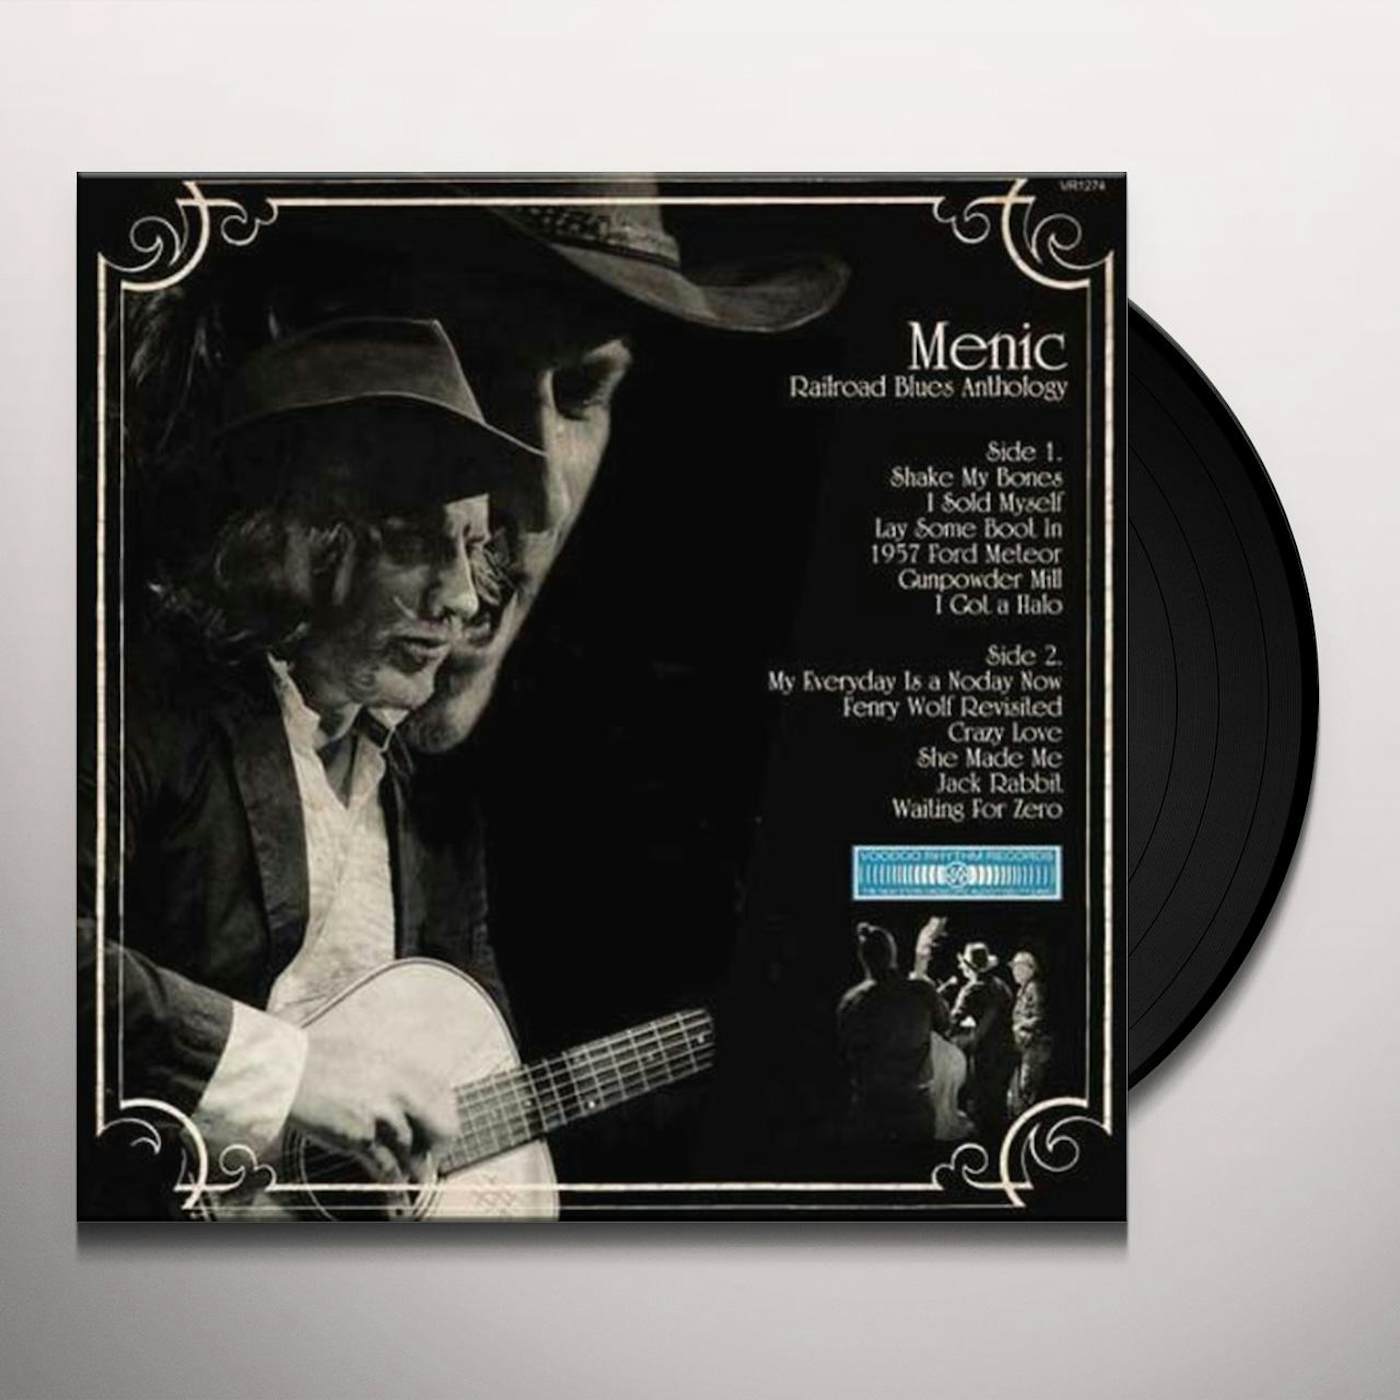 Menic Railroad Blues Anthology Vinyl Record